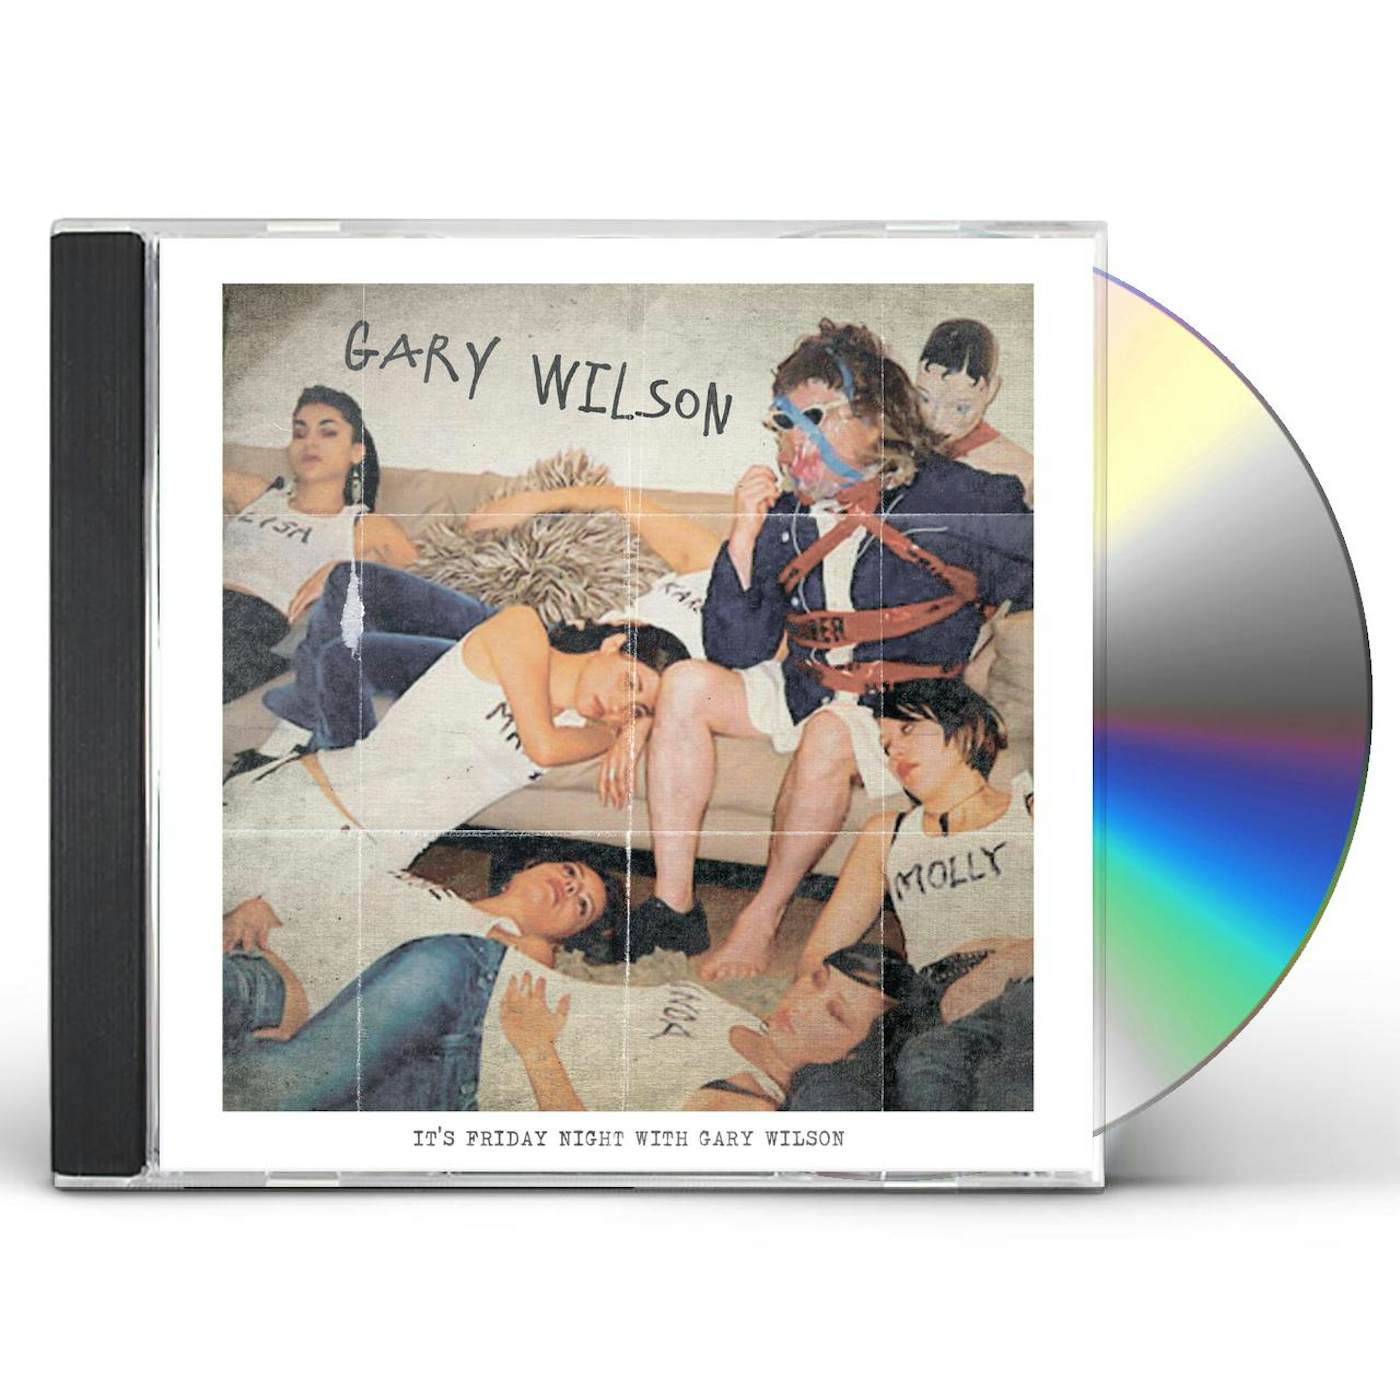 FRIDAY NIGHT WITH GARY WILSON CD